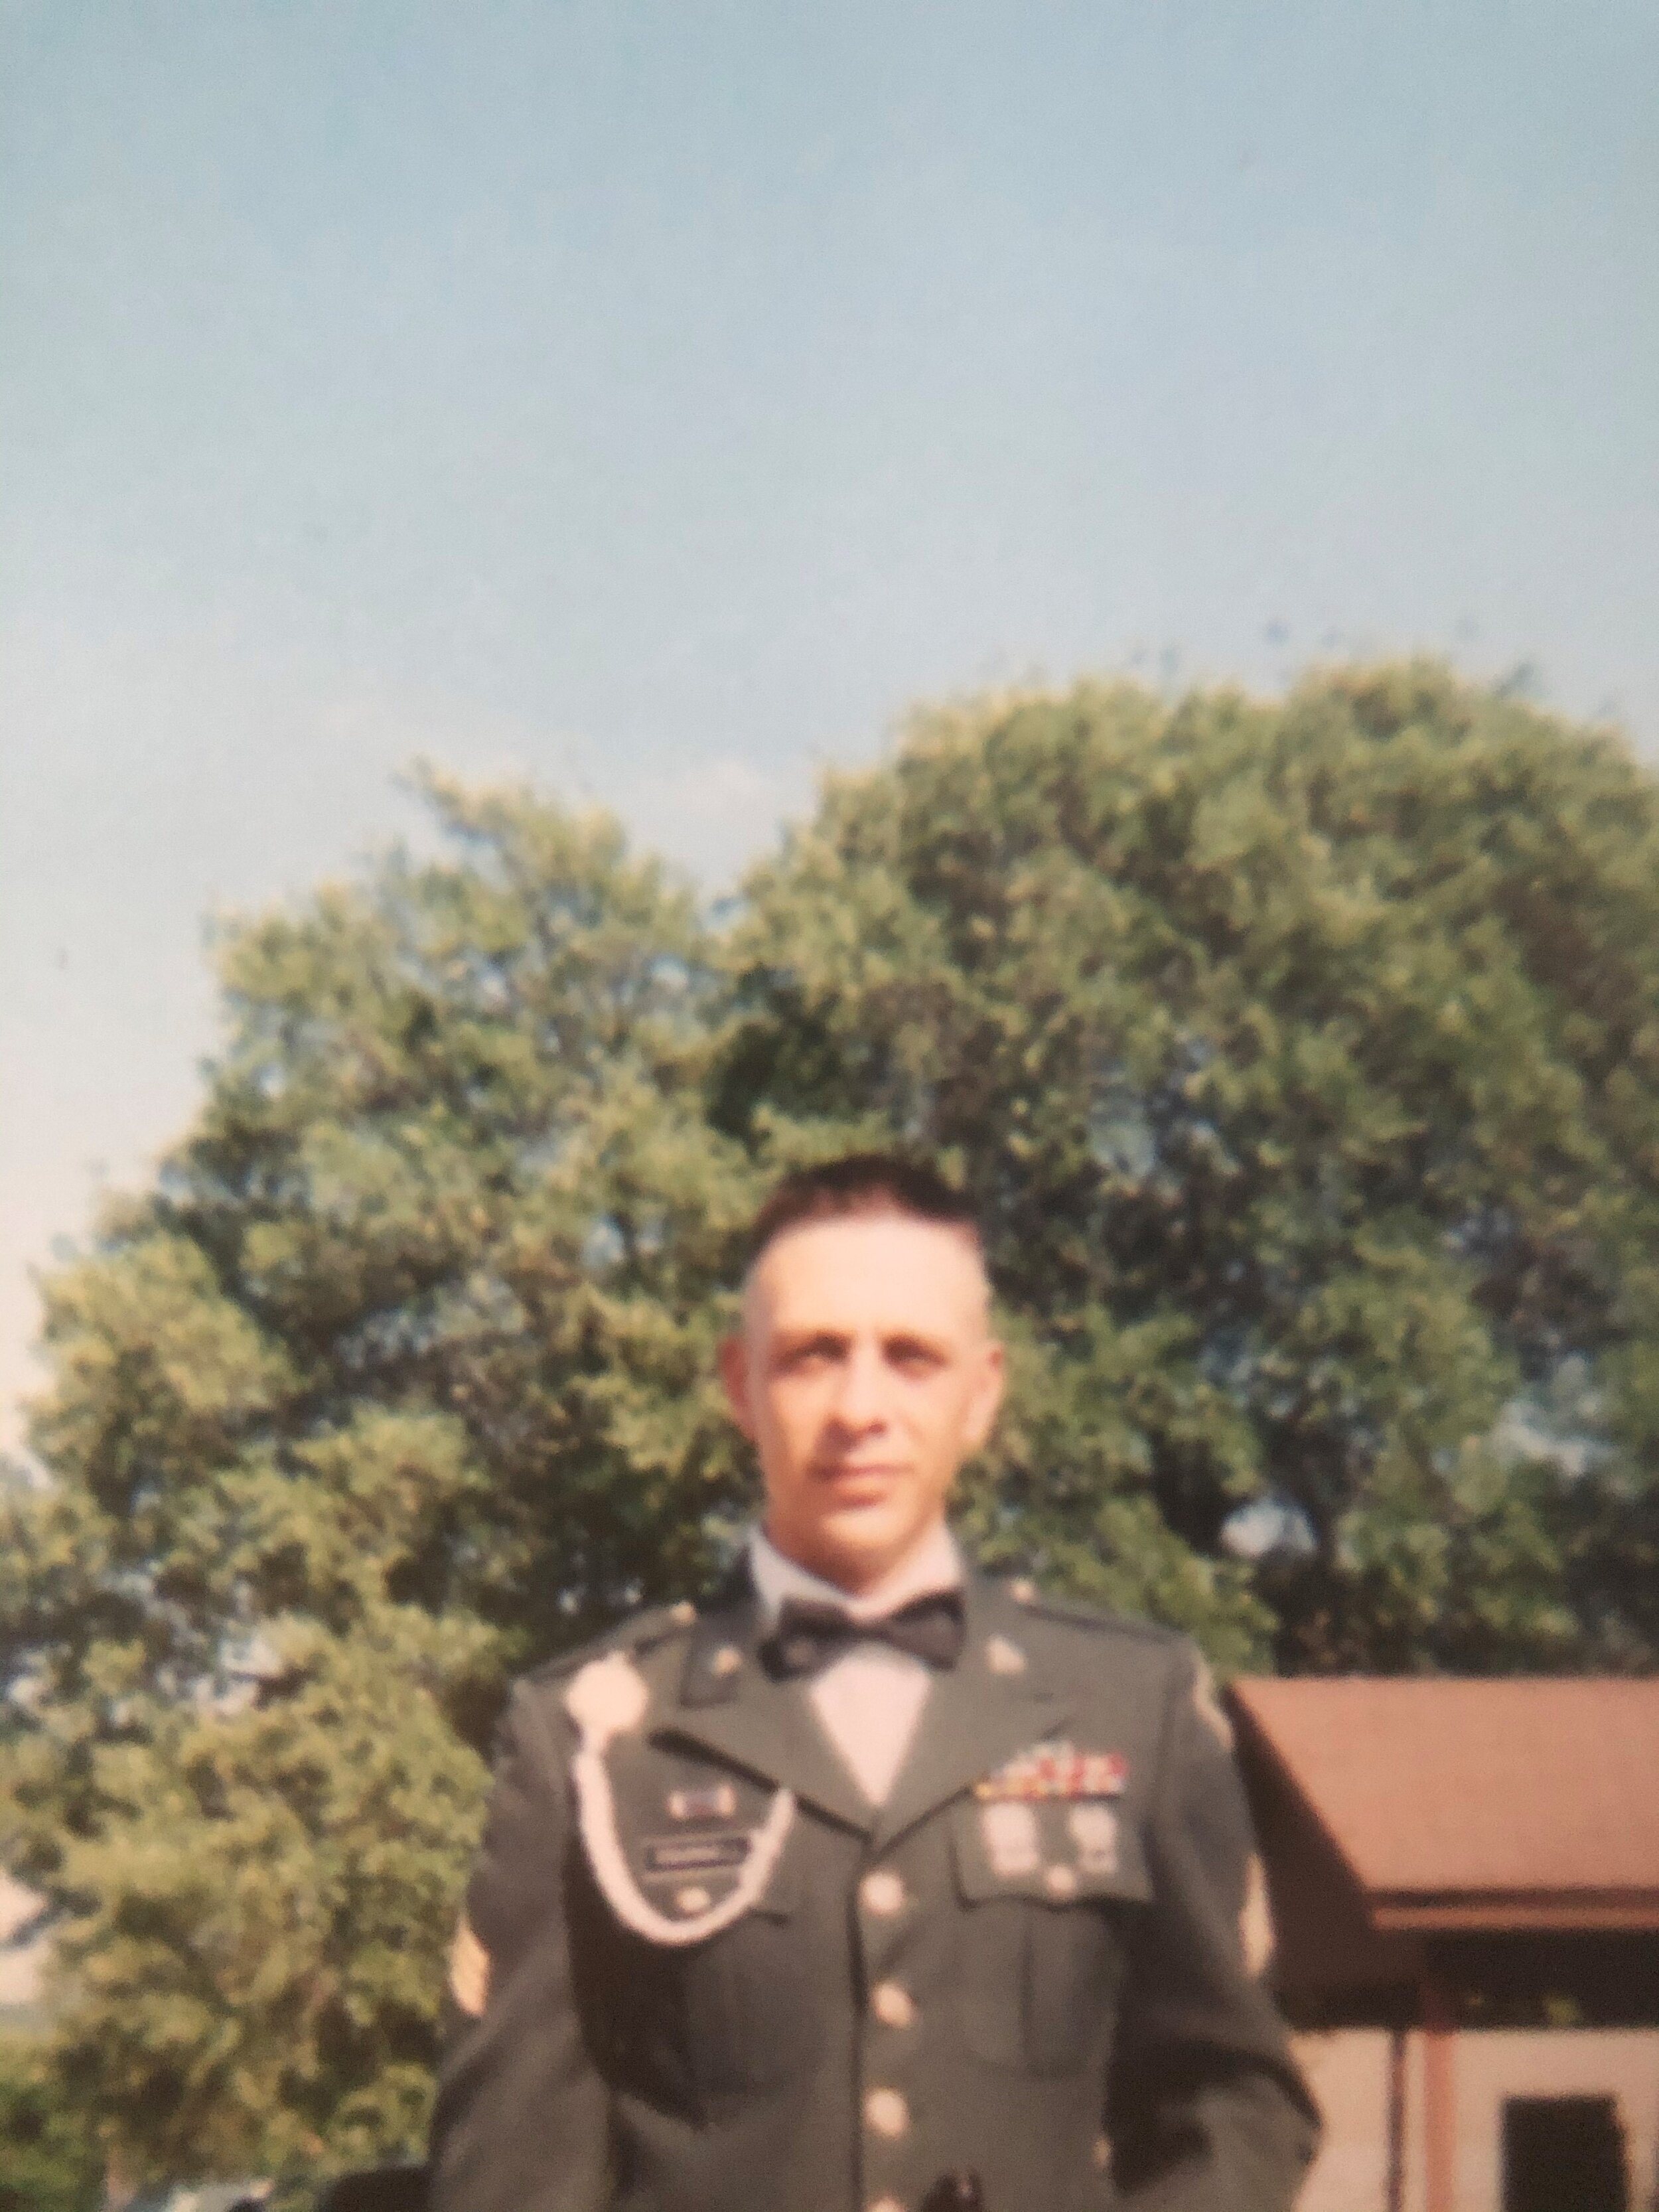 FY2021 Richard O'Donnell in Army Uniform E-5.jpg